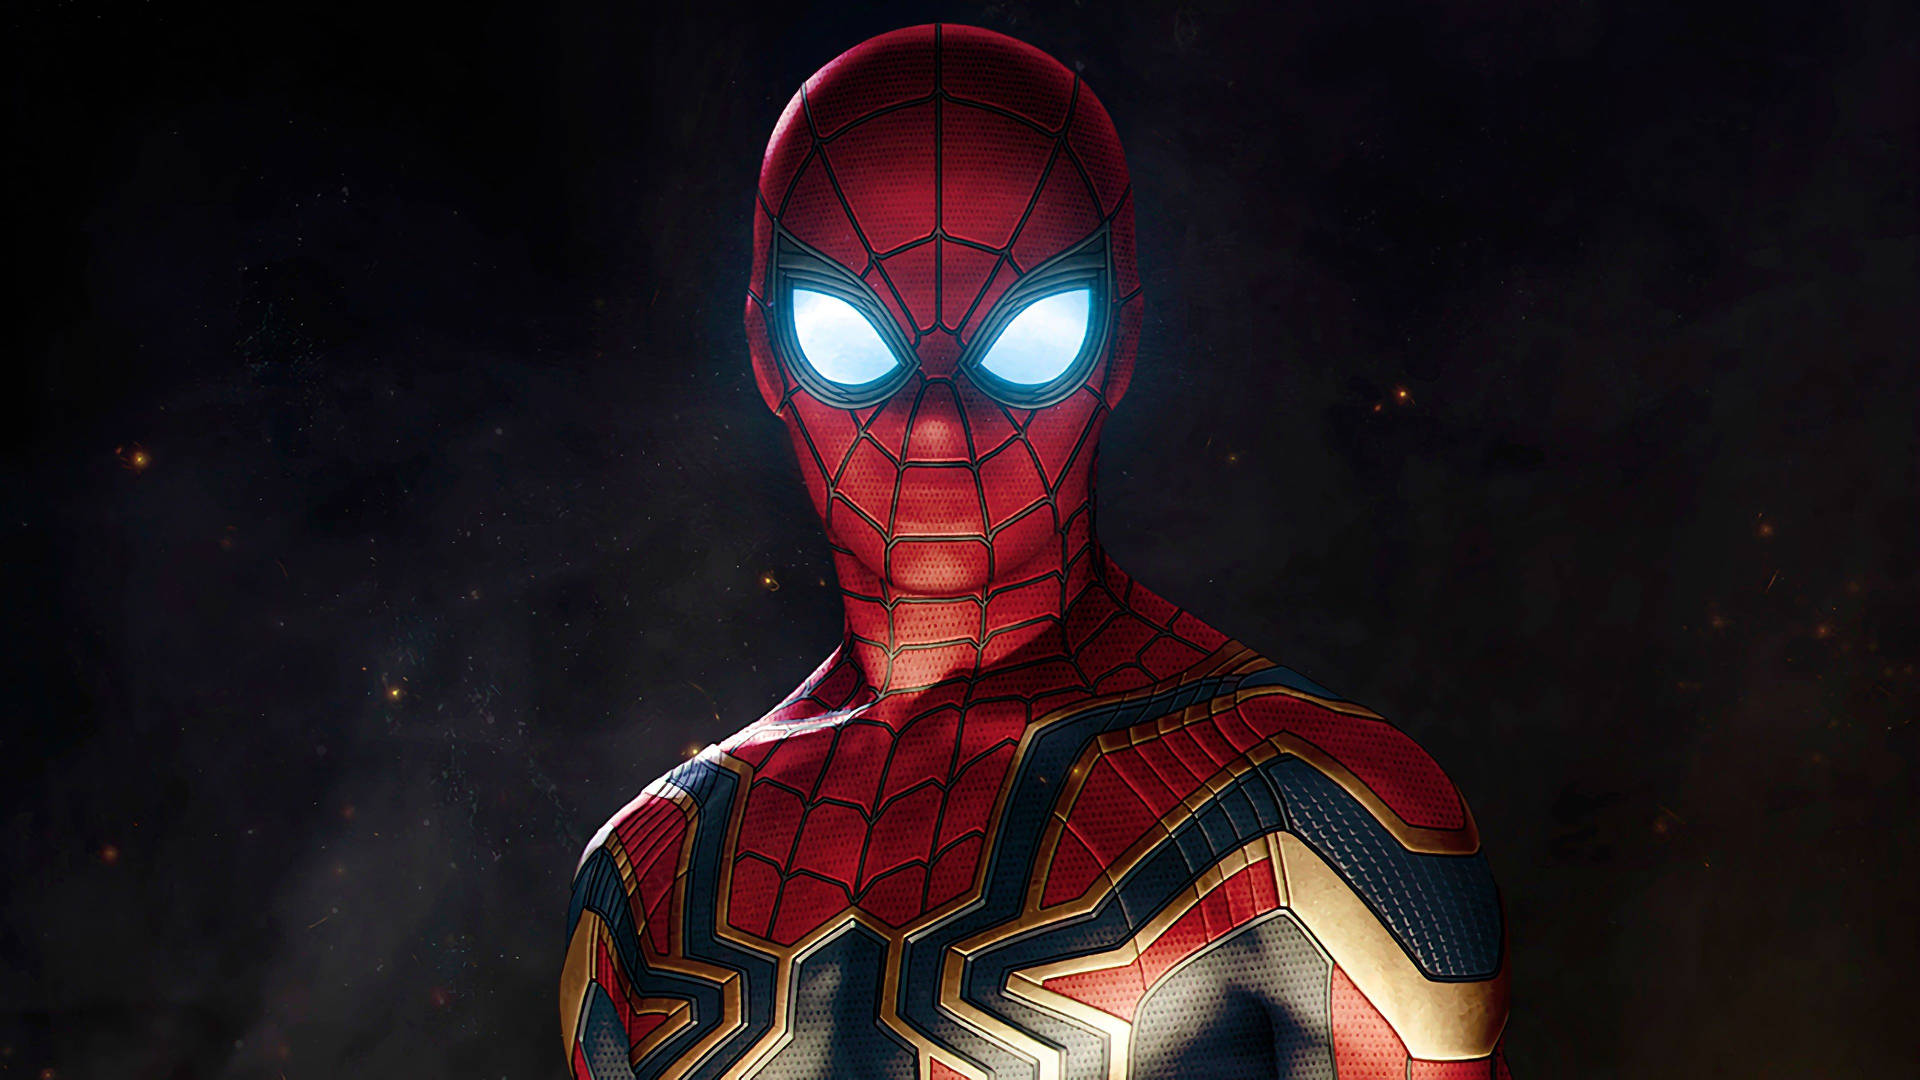 Spiderman Of Avengers Infinity War 4k Background